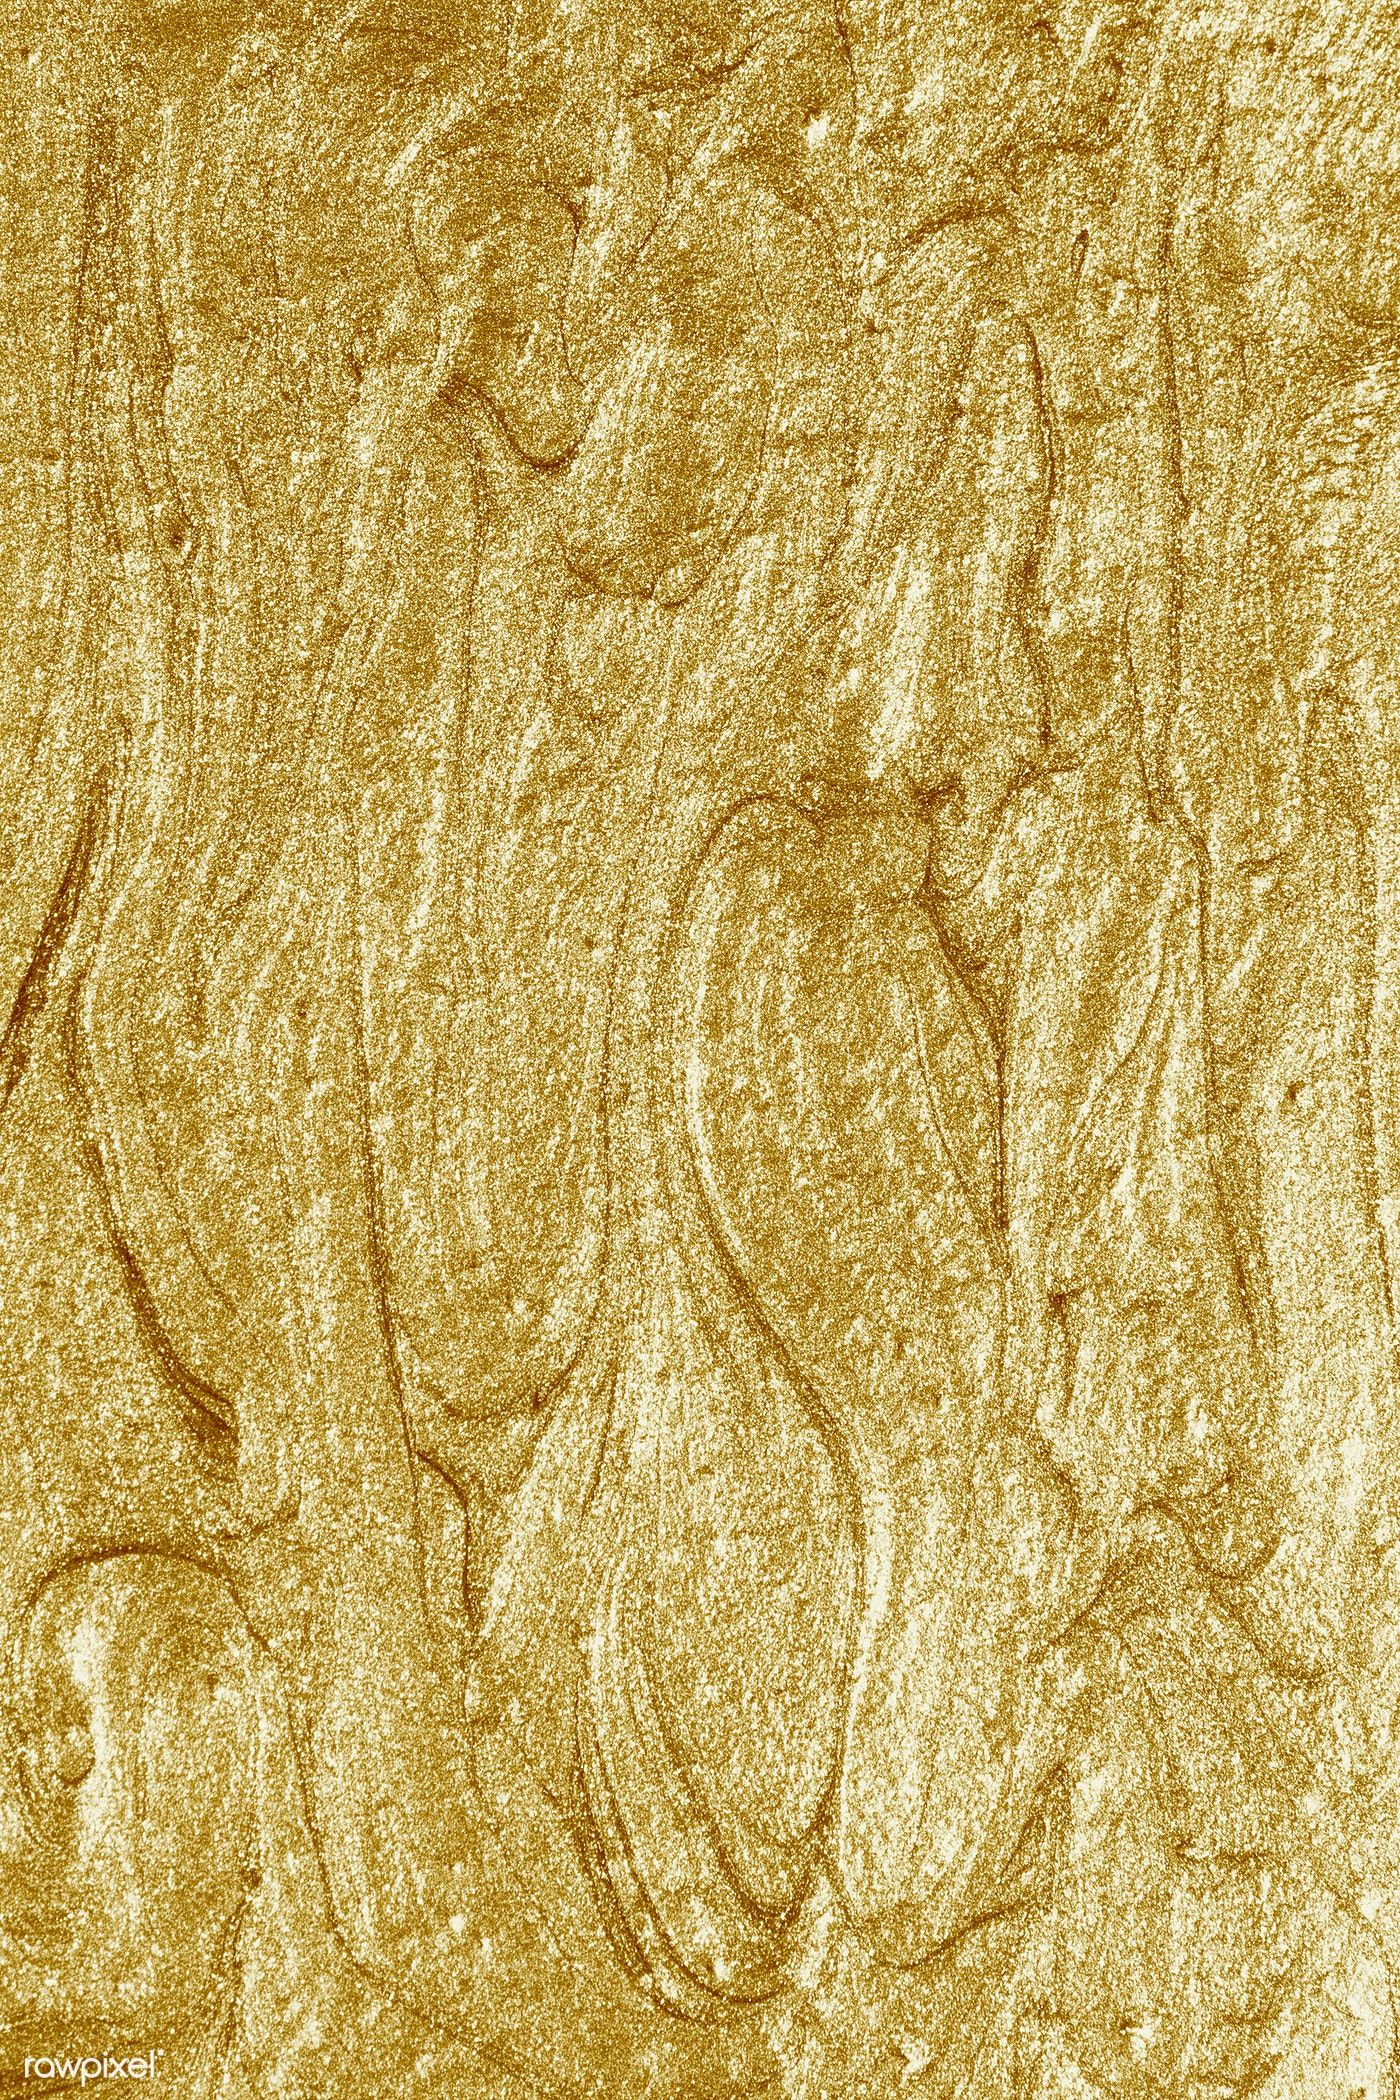 Metallic gold paint textured background. free image / katie. Metallic gold paint, Texture painting, Textured background